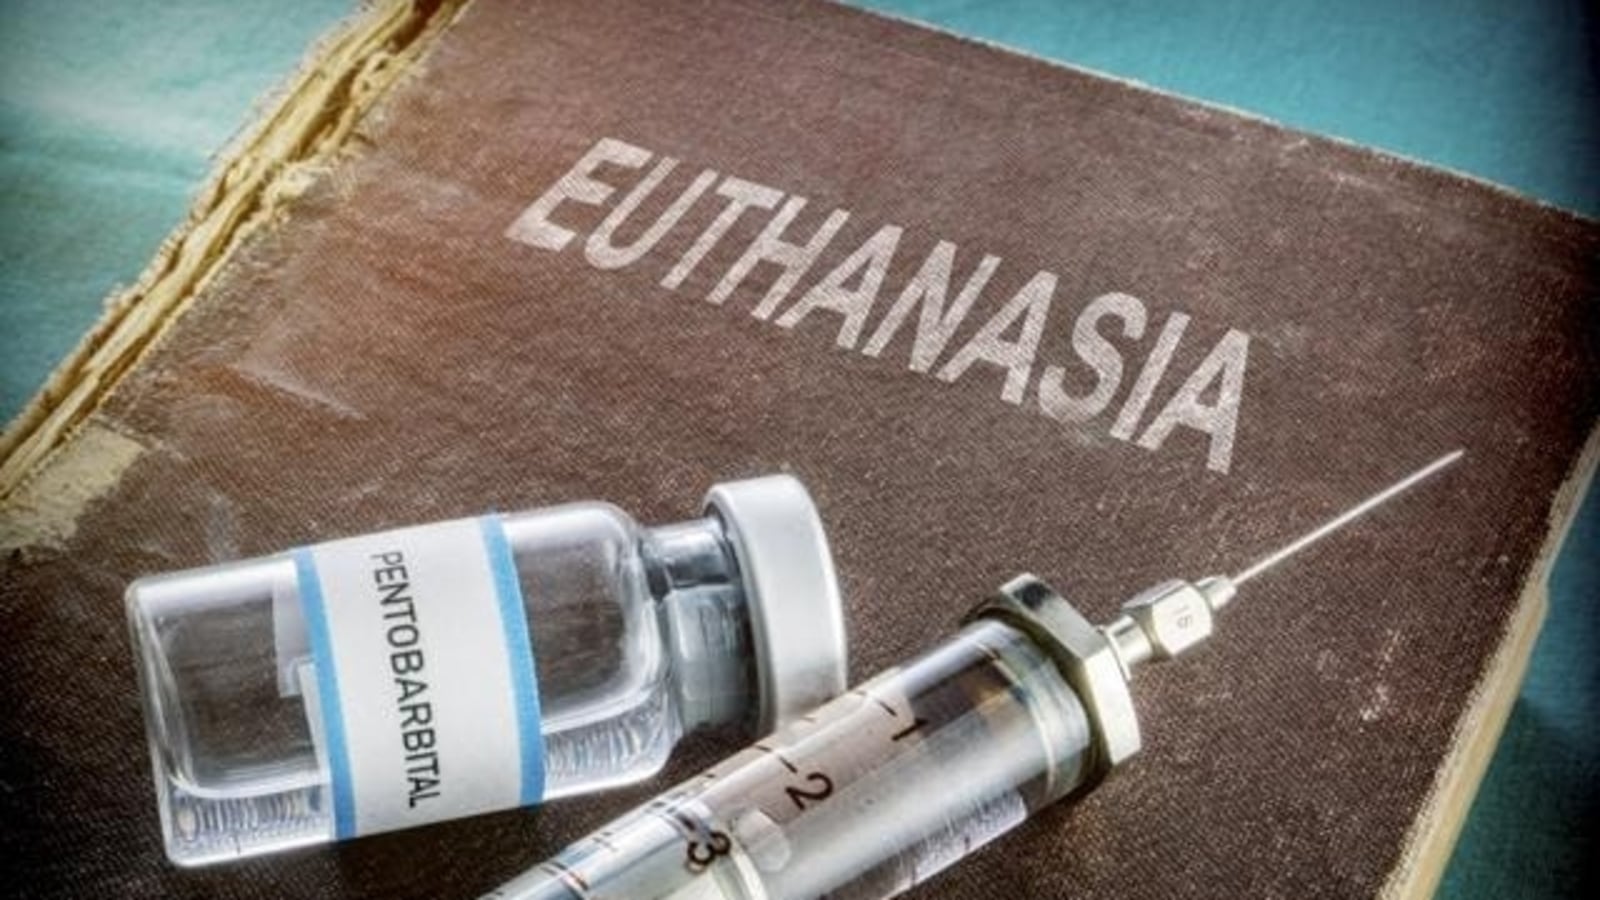 Look Both Ways: Euthanasia – Northern Star